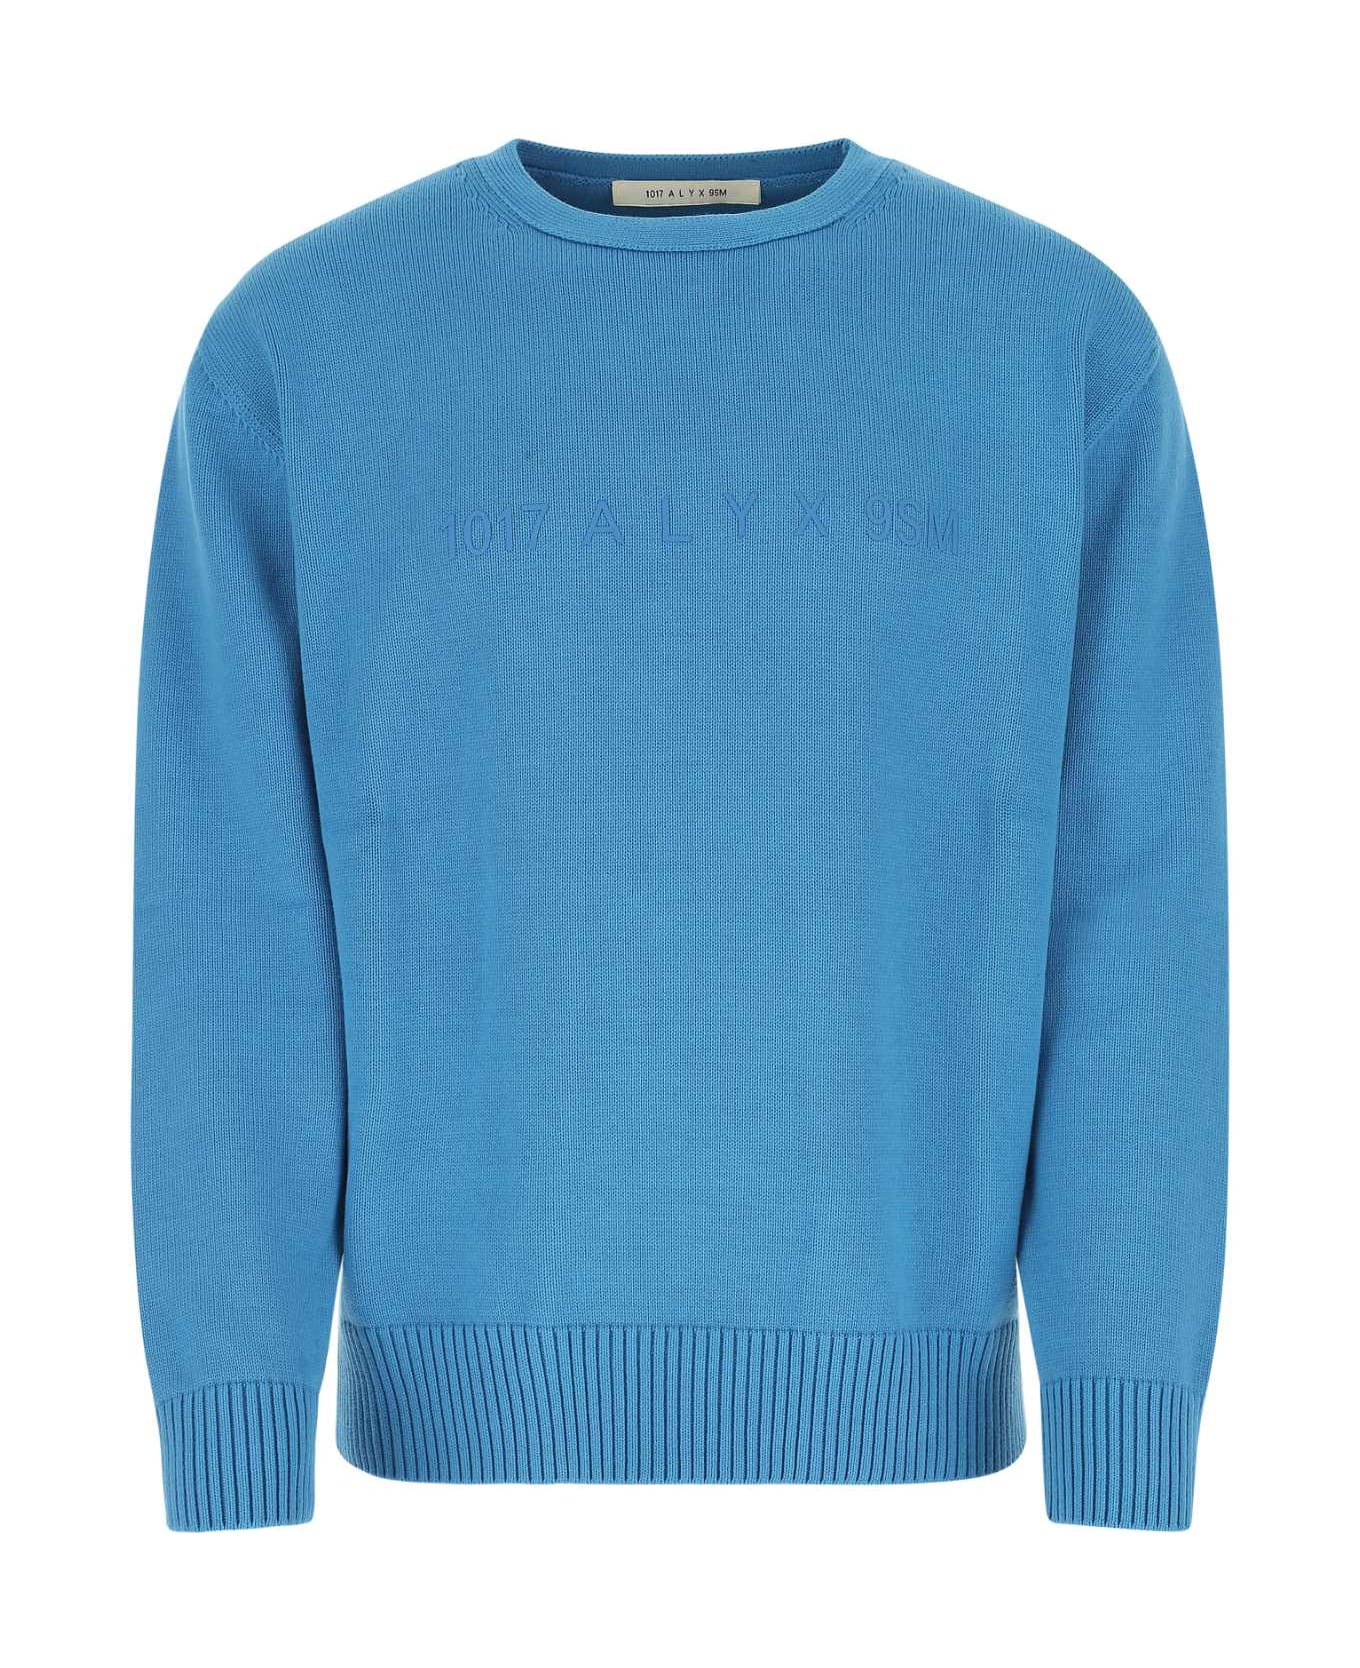 1017 ALYX 9SM Turquoise Cotton Sweater - BLU0001